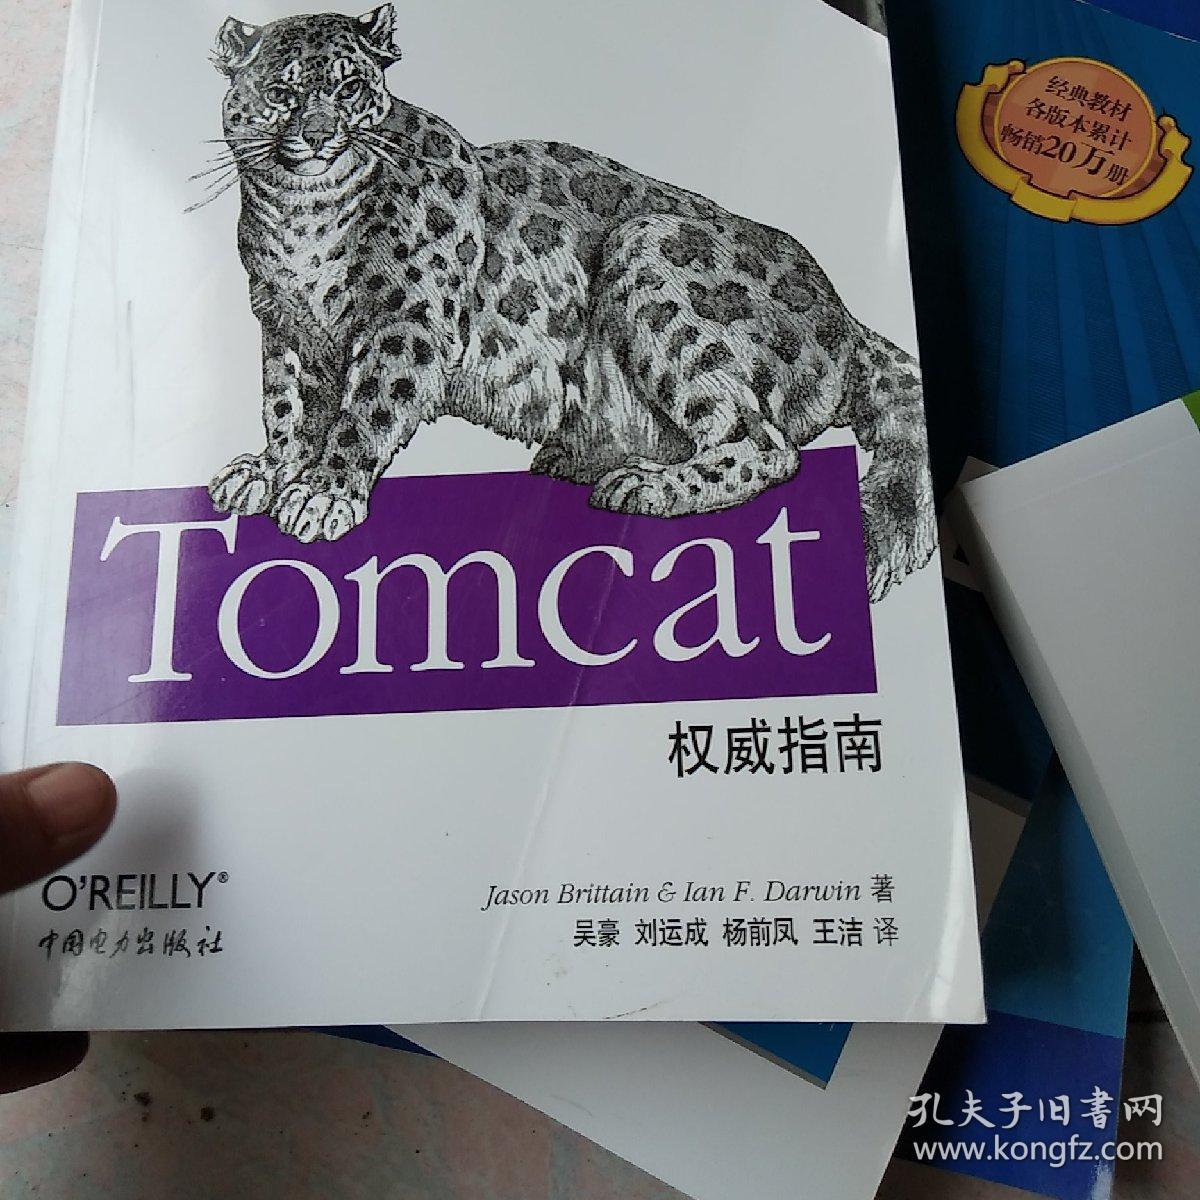 Tomcat权威指南（第2版）